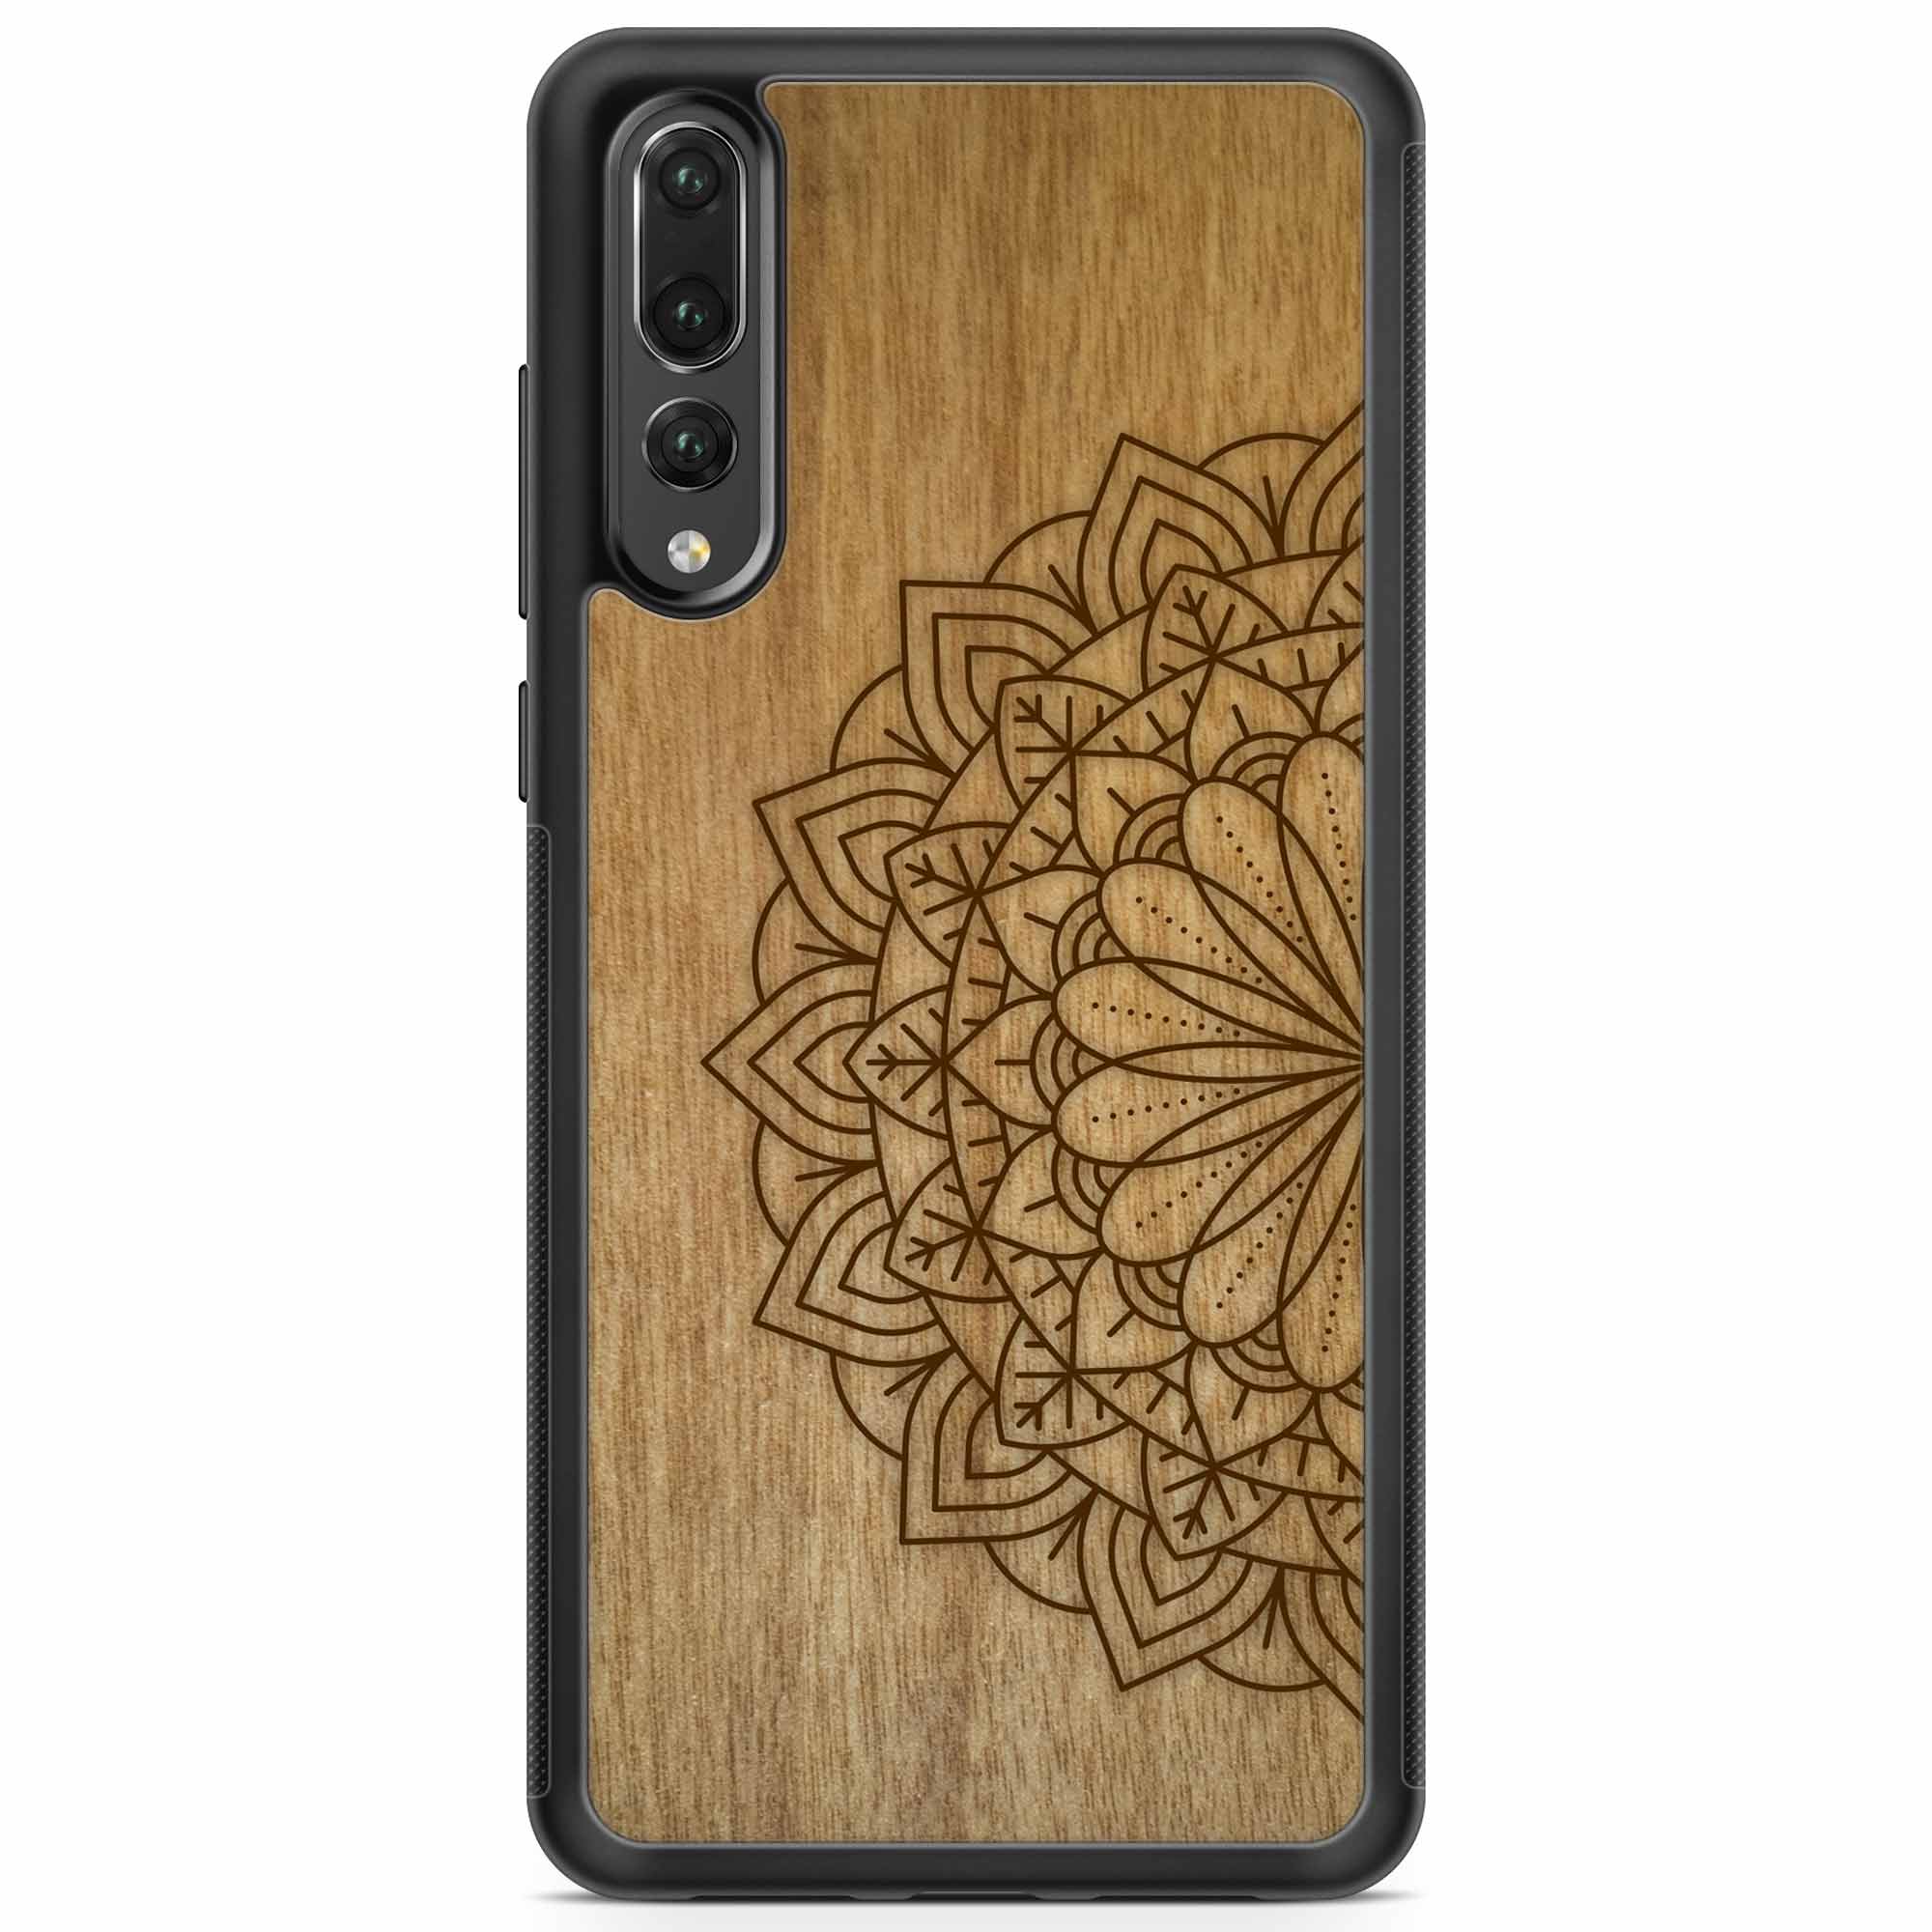 Engraved Mandala Wood Phone Case Huawei P20 Pro